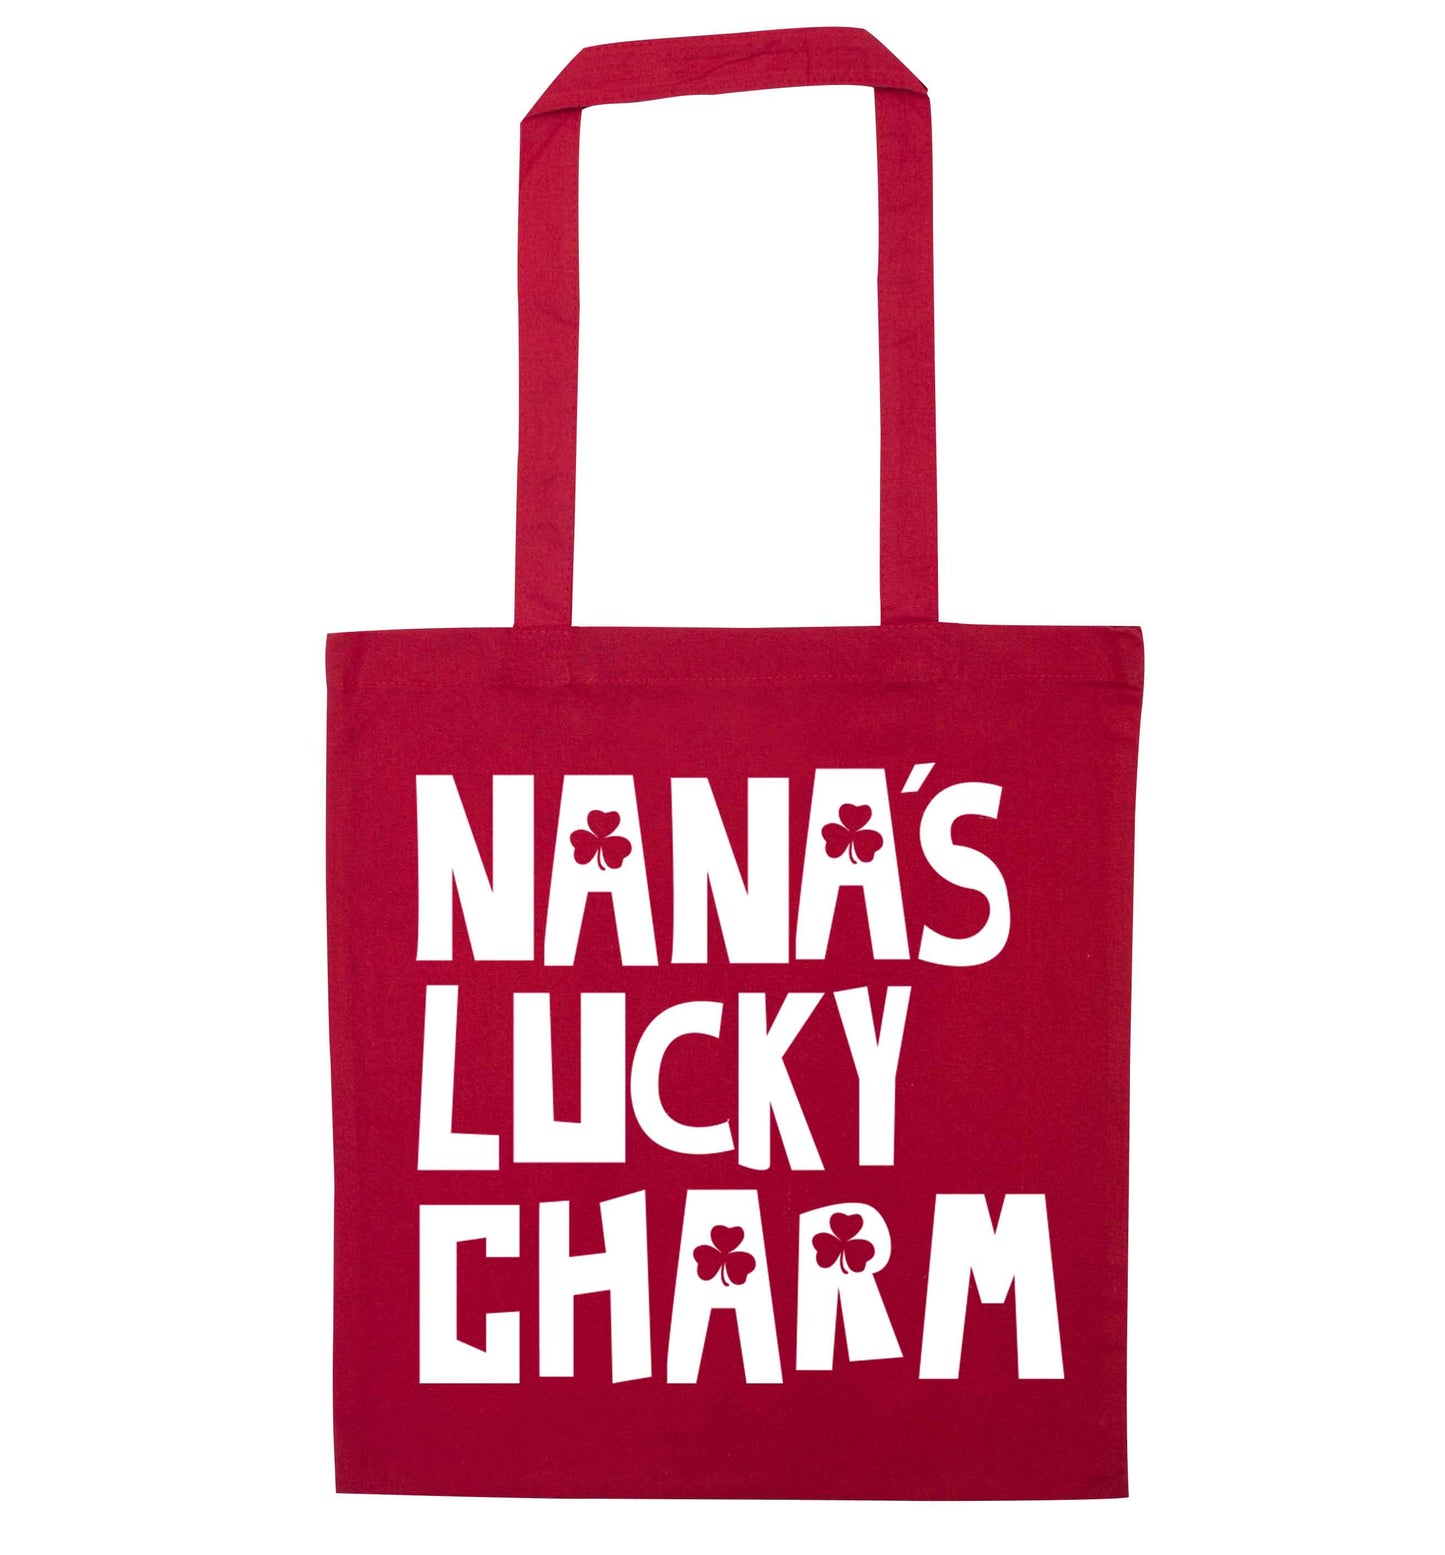 Nana's lucky charm red tote bag